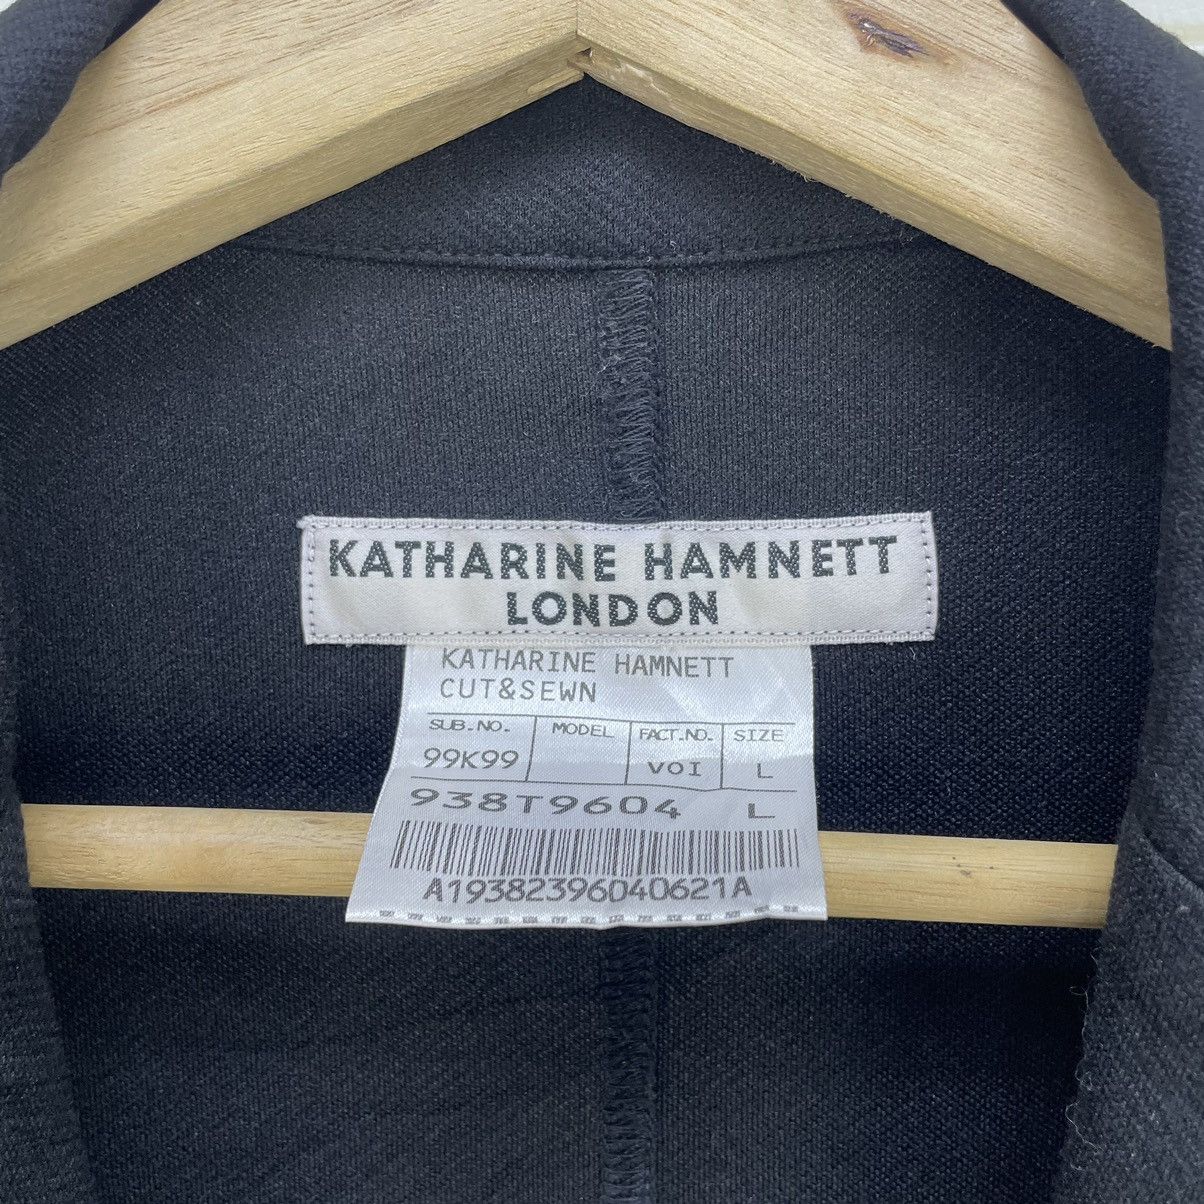 Katharine Hamnett London 👉Katharine Hamnett London Jacket | Grailed